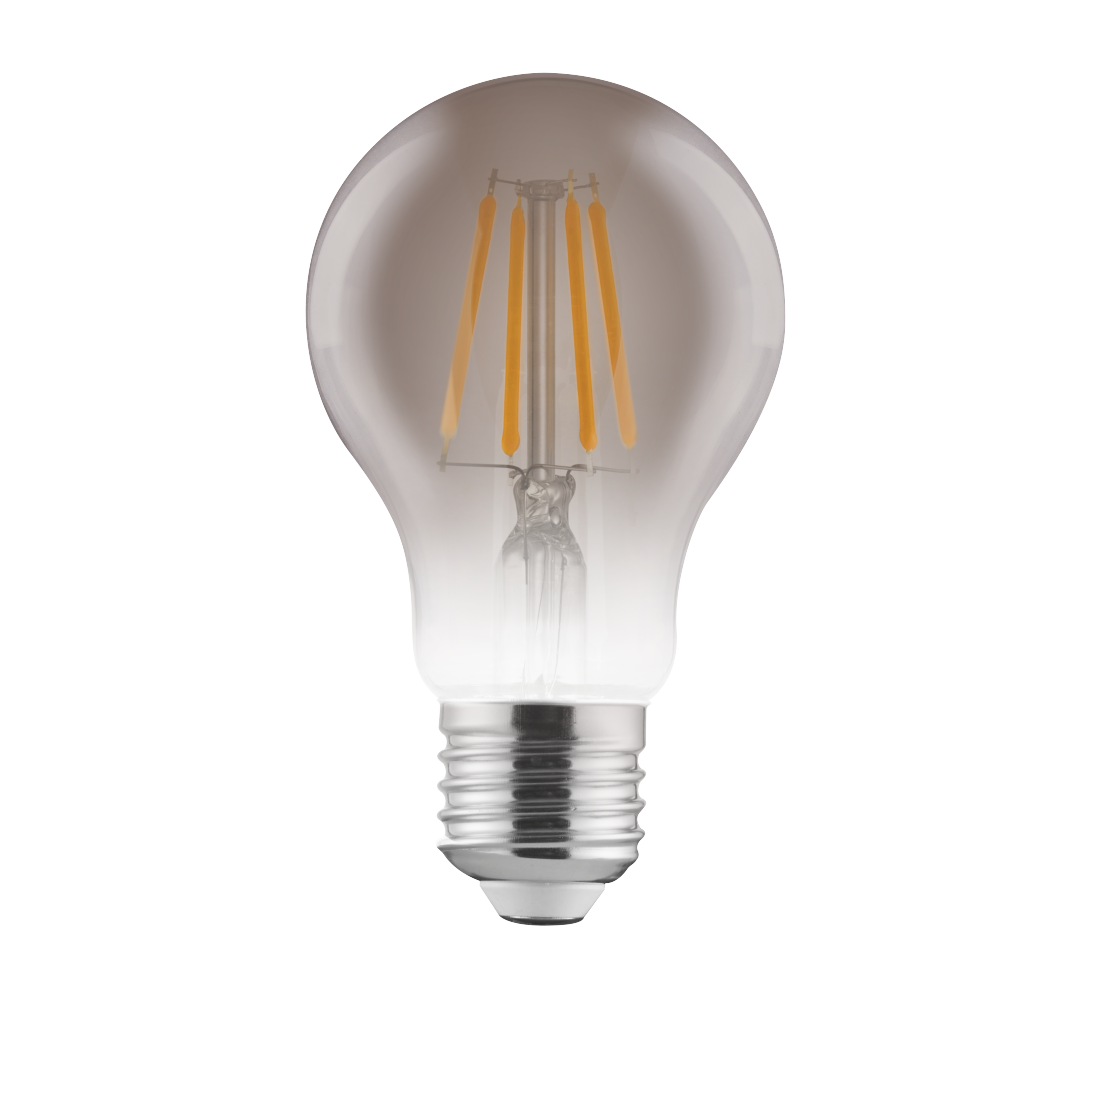 abx Druckfähige Abbildung - Xavax, LED-Filament, E27, 340lm 6W, Vintage-Lampe Glühlampe, Warmweiß